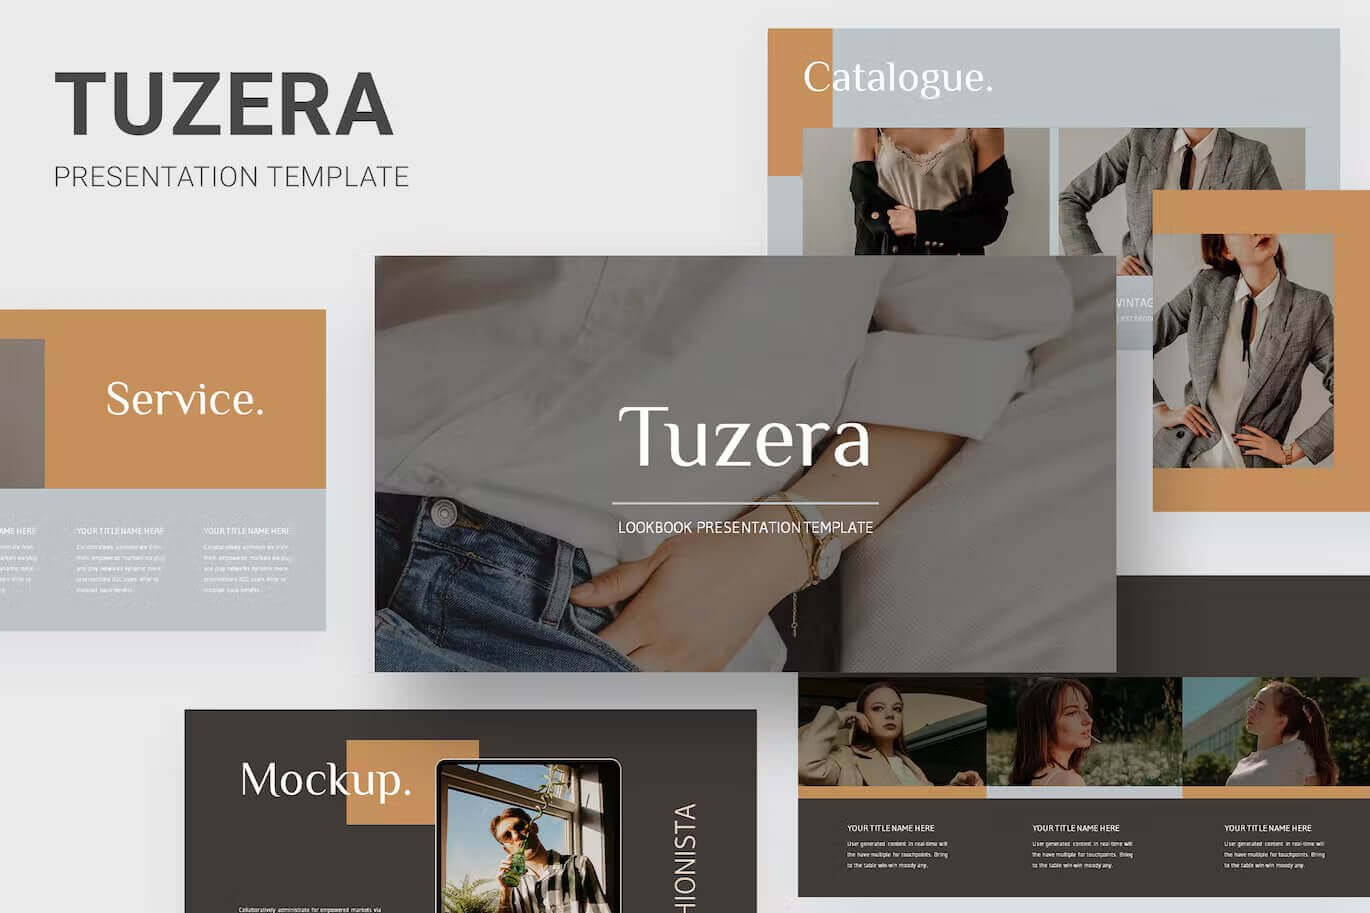 Mockup of Tuzera Presentation Template.